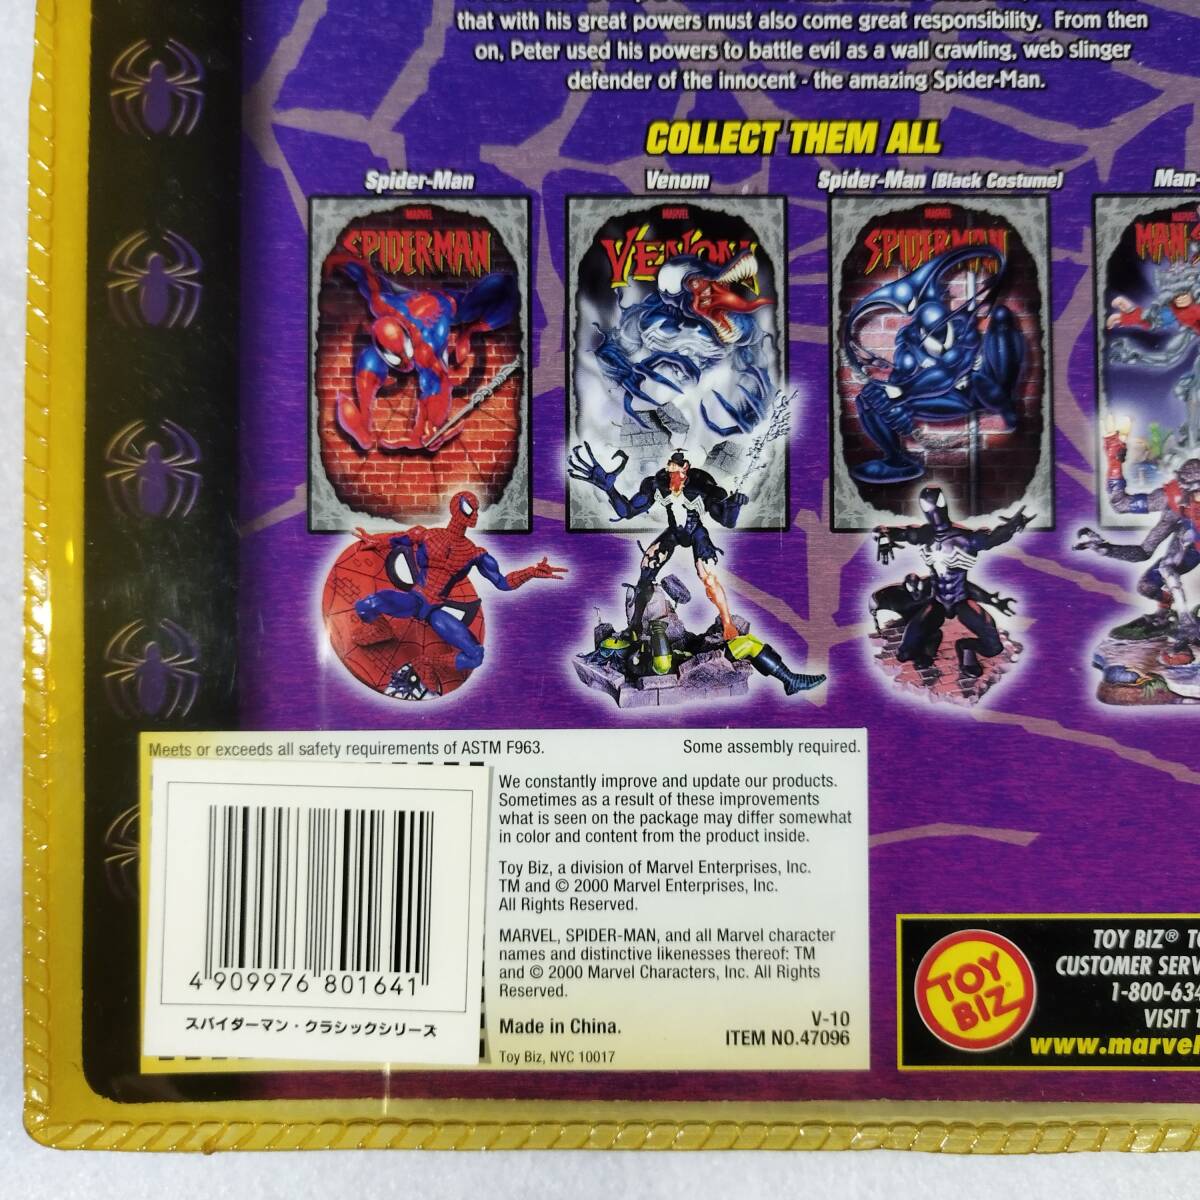  postage included [ Spider-Man ] Classic series unopened goods figure toy bizSPIDER-MAN CLASSICS